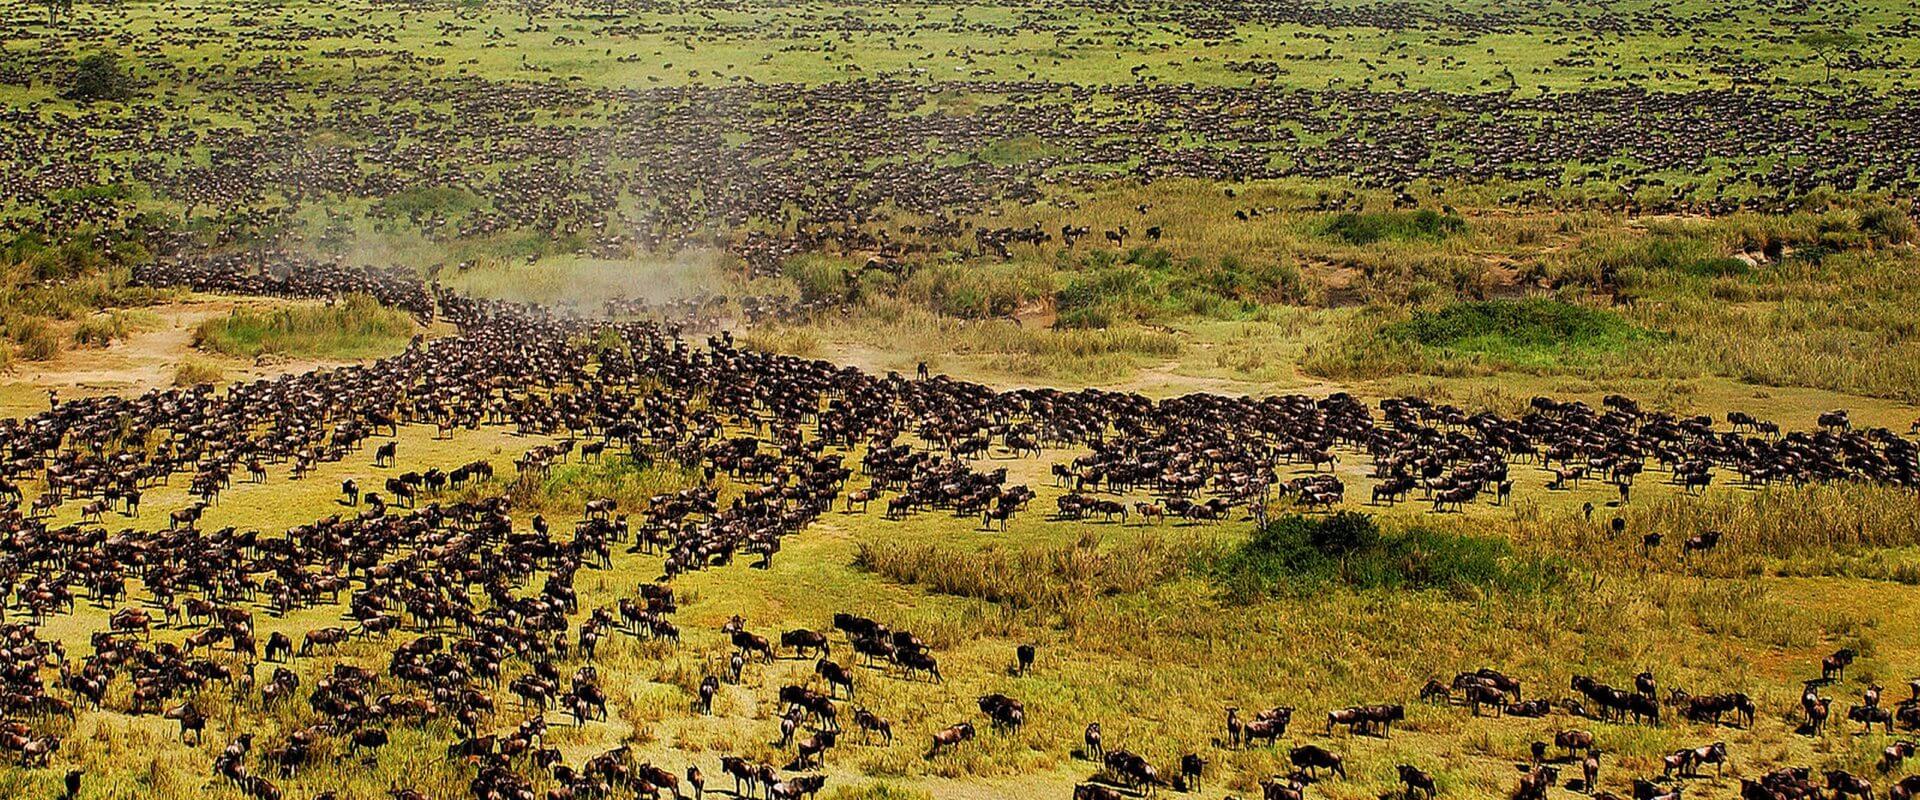 Tanzania Serengeti National Park Migration